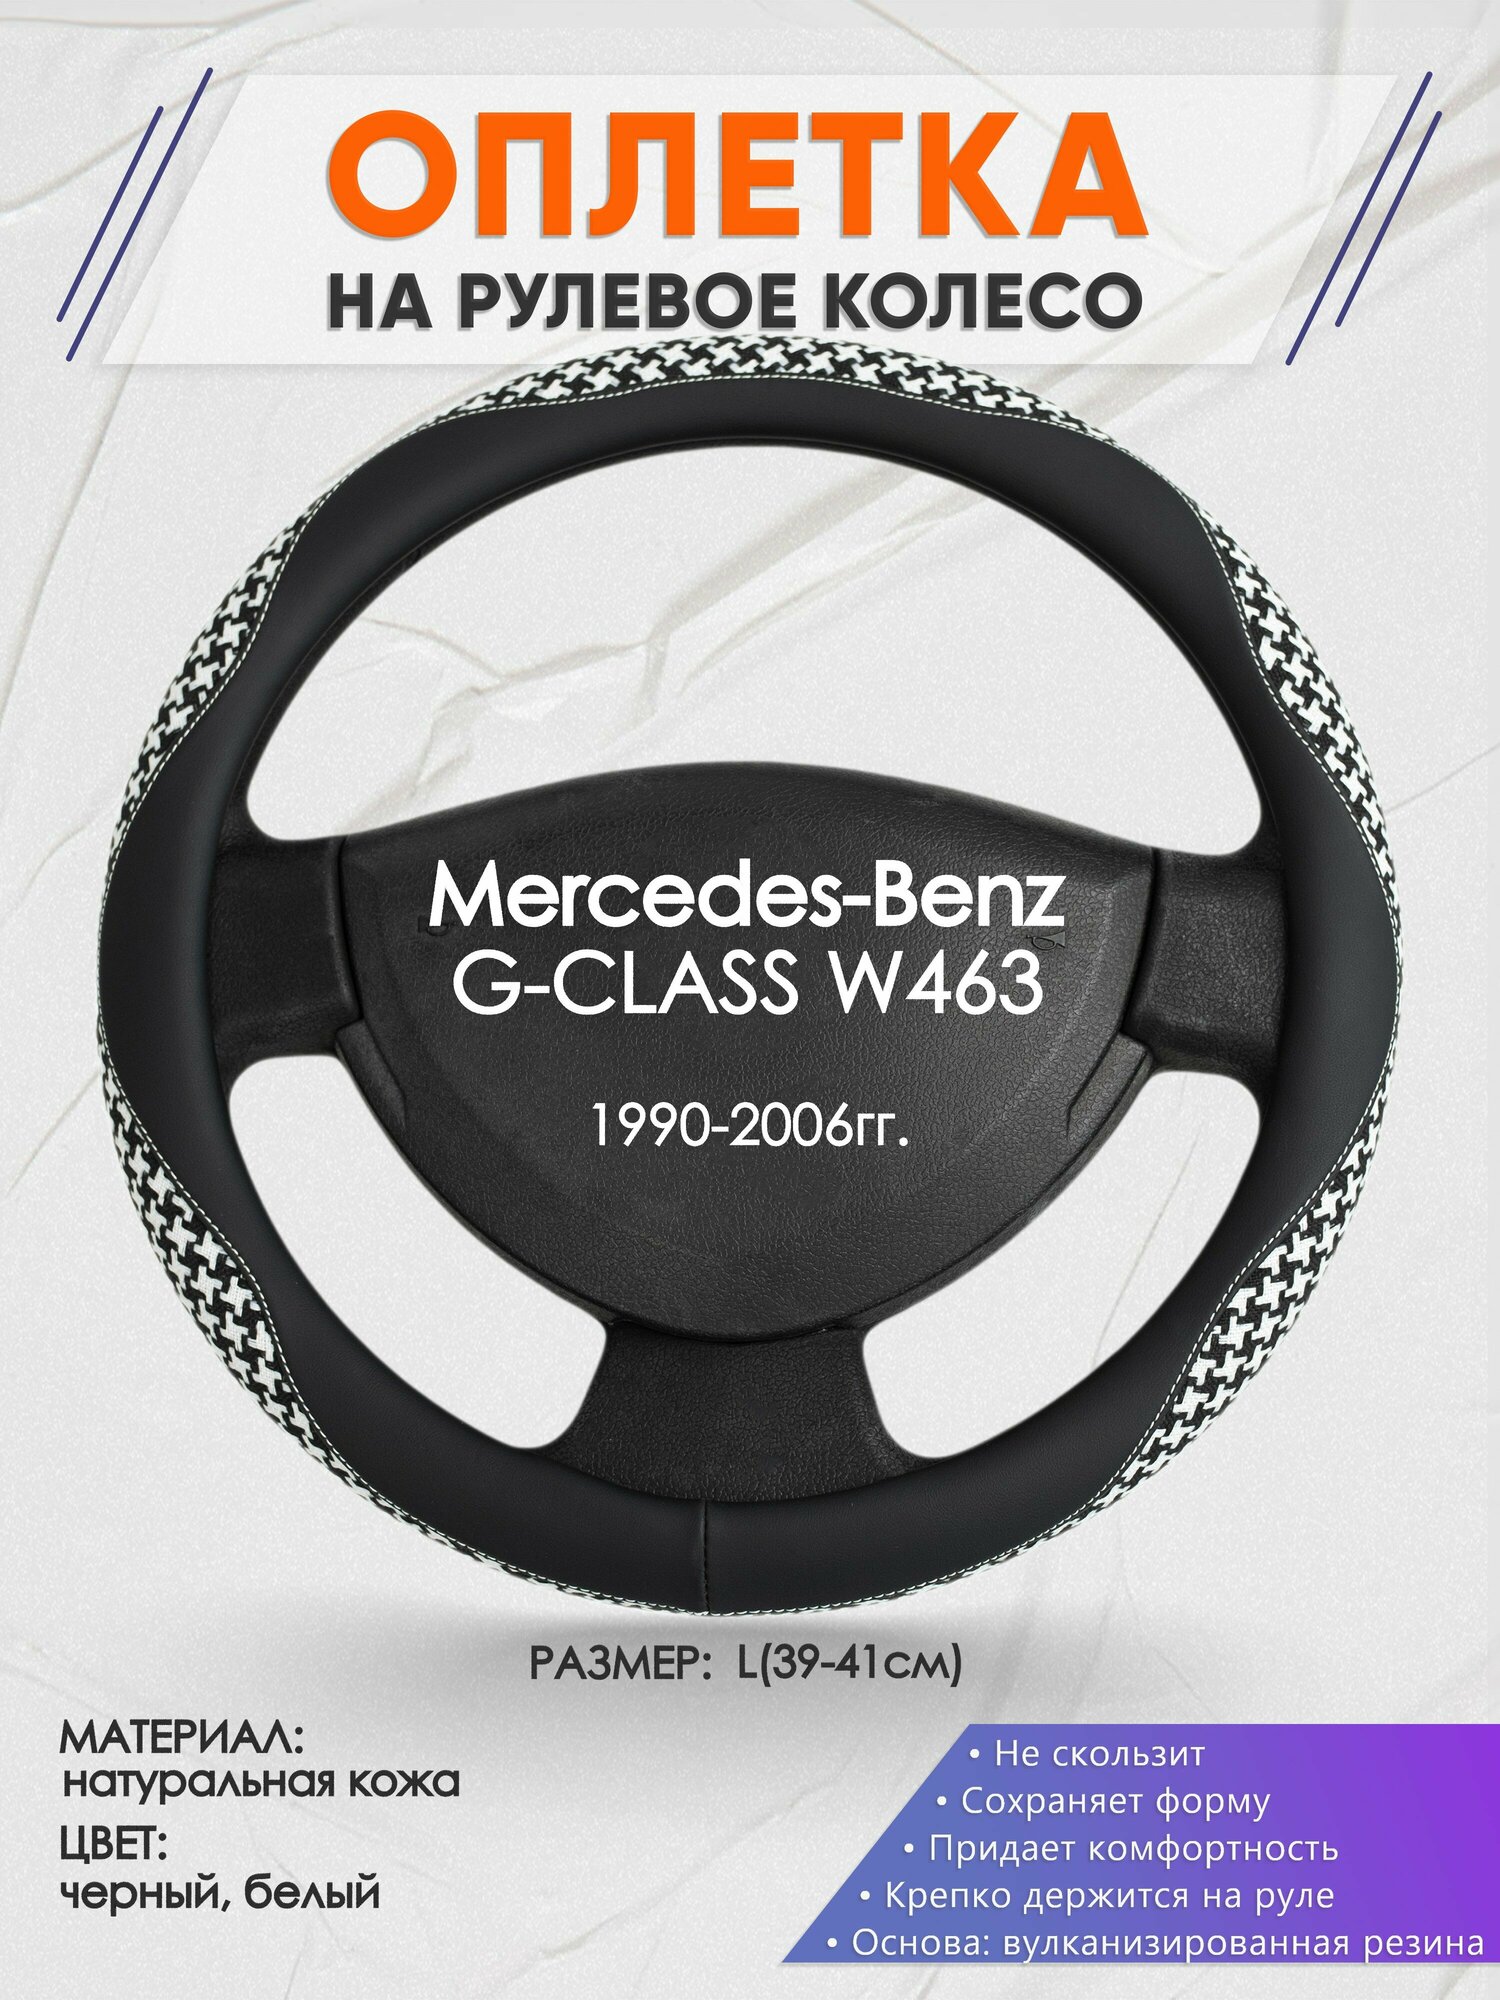 Оплетка на руль для Mercedes-Benz G-CLASS W463(Мерседес Бенц Г Класс) 1990-2006, L(39-41см), Натуральная кожа 21